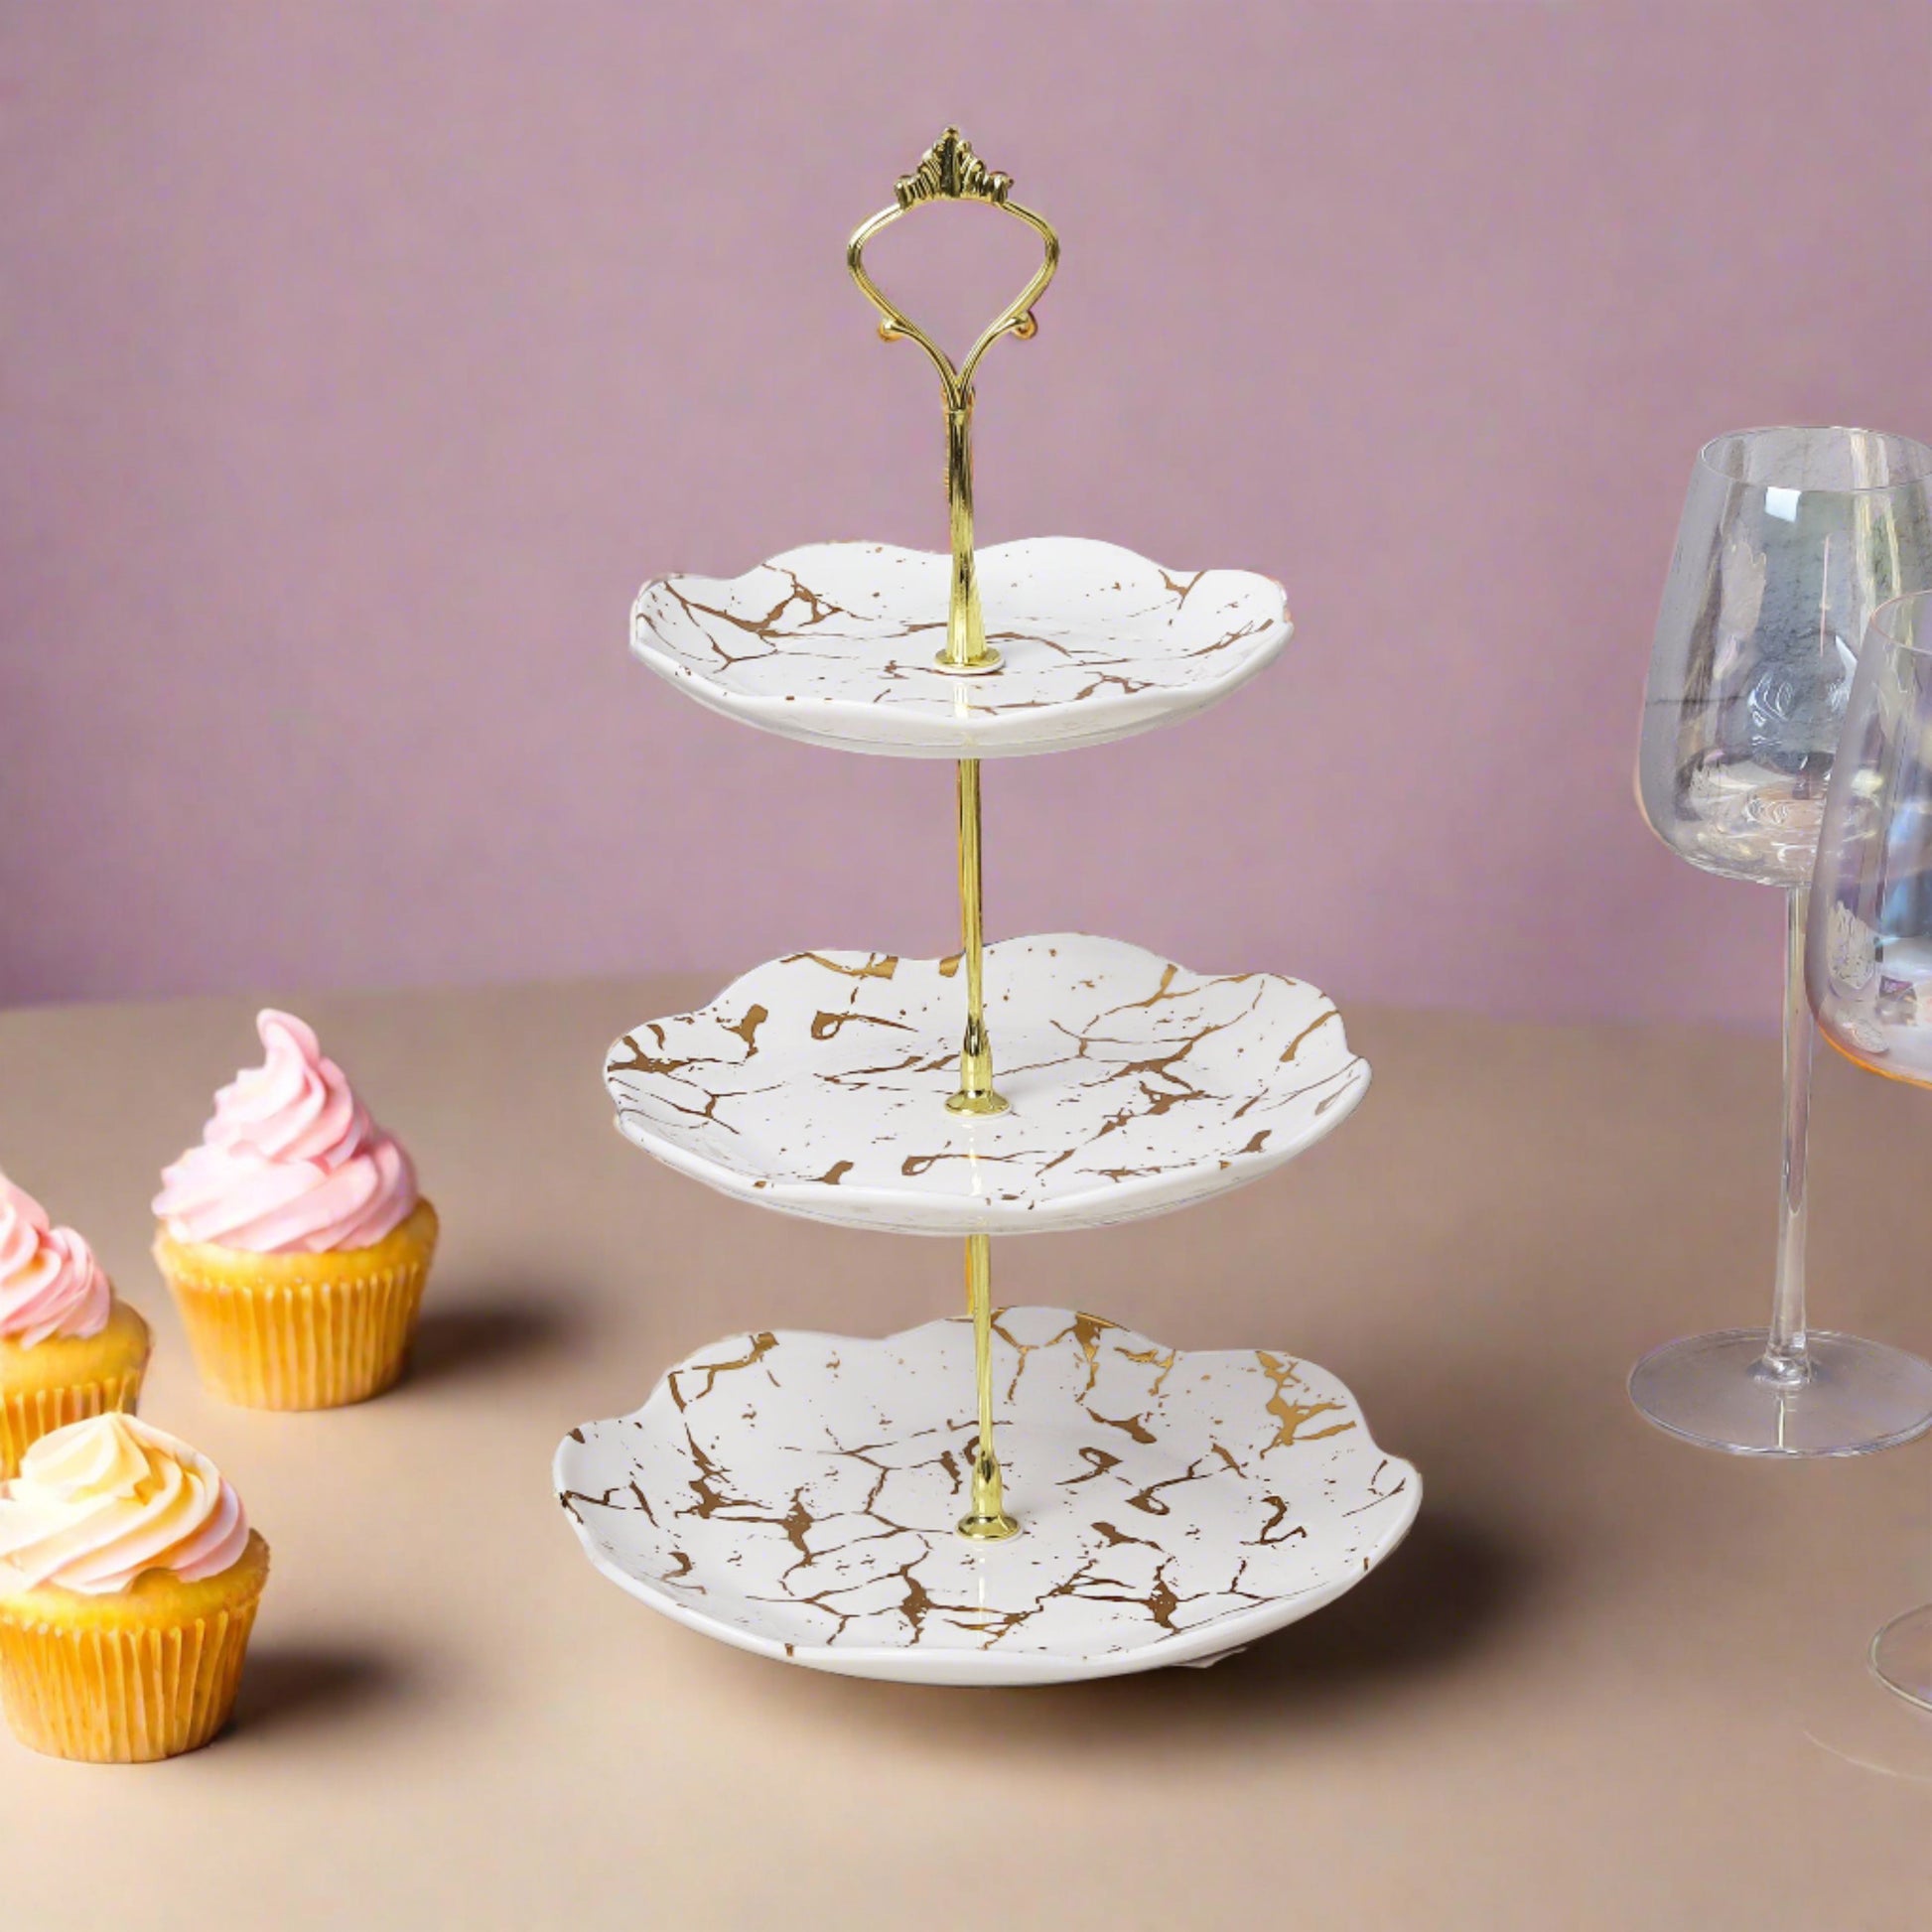 Elevated ceramic dessert/cake stand - a stylish presentation for sweet treats